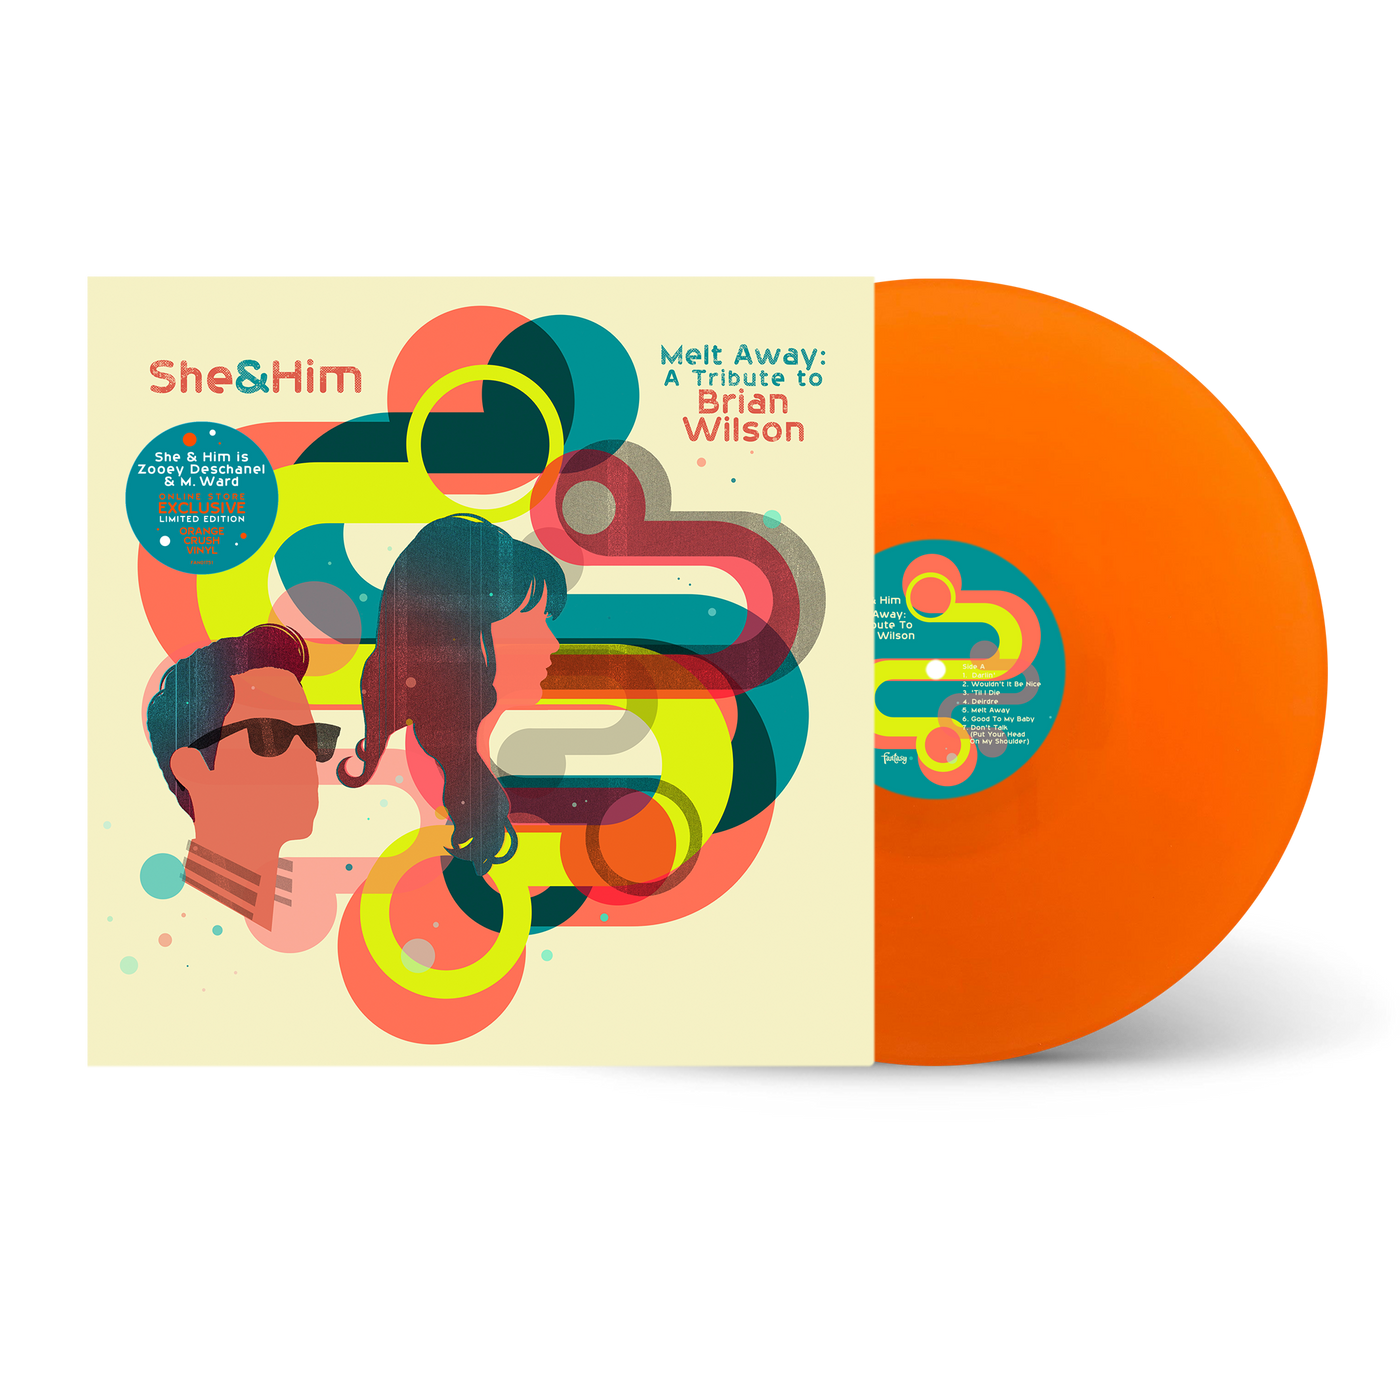 Melt Away: A Tribute To Brian Wilson Orange Translucent Vinyl LP